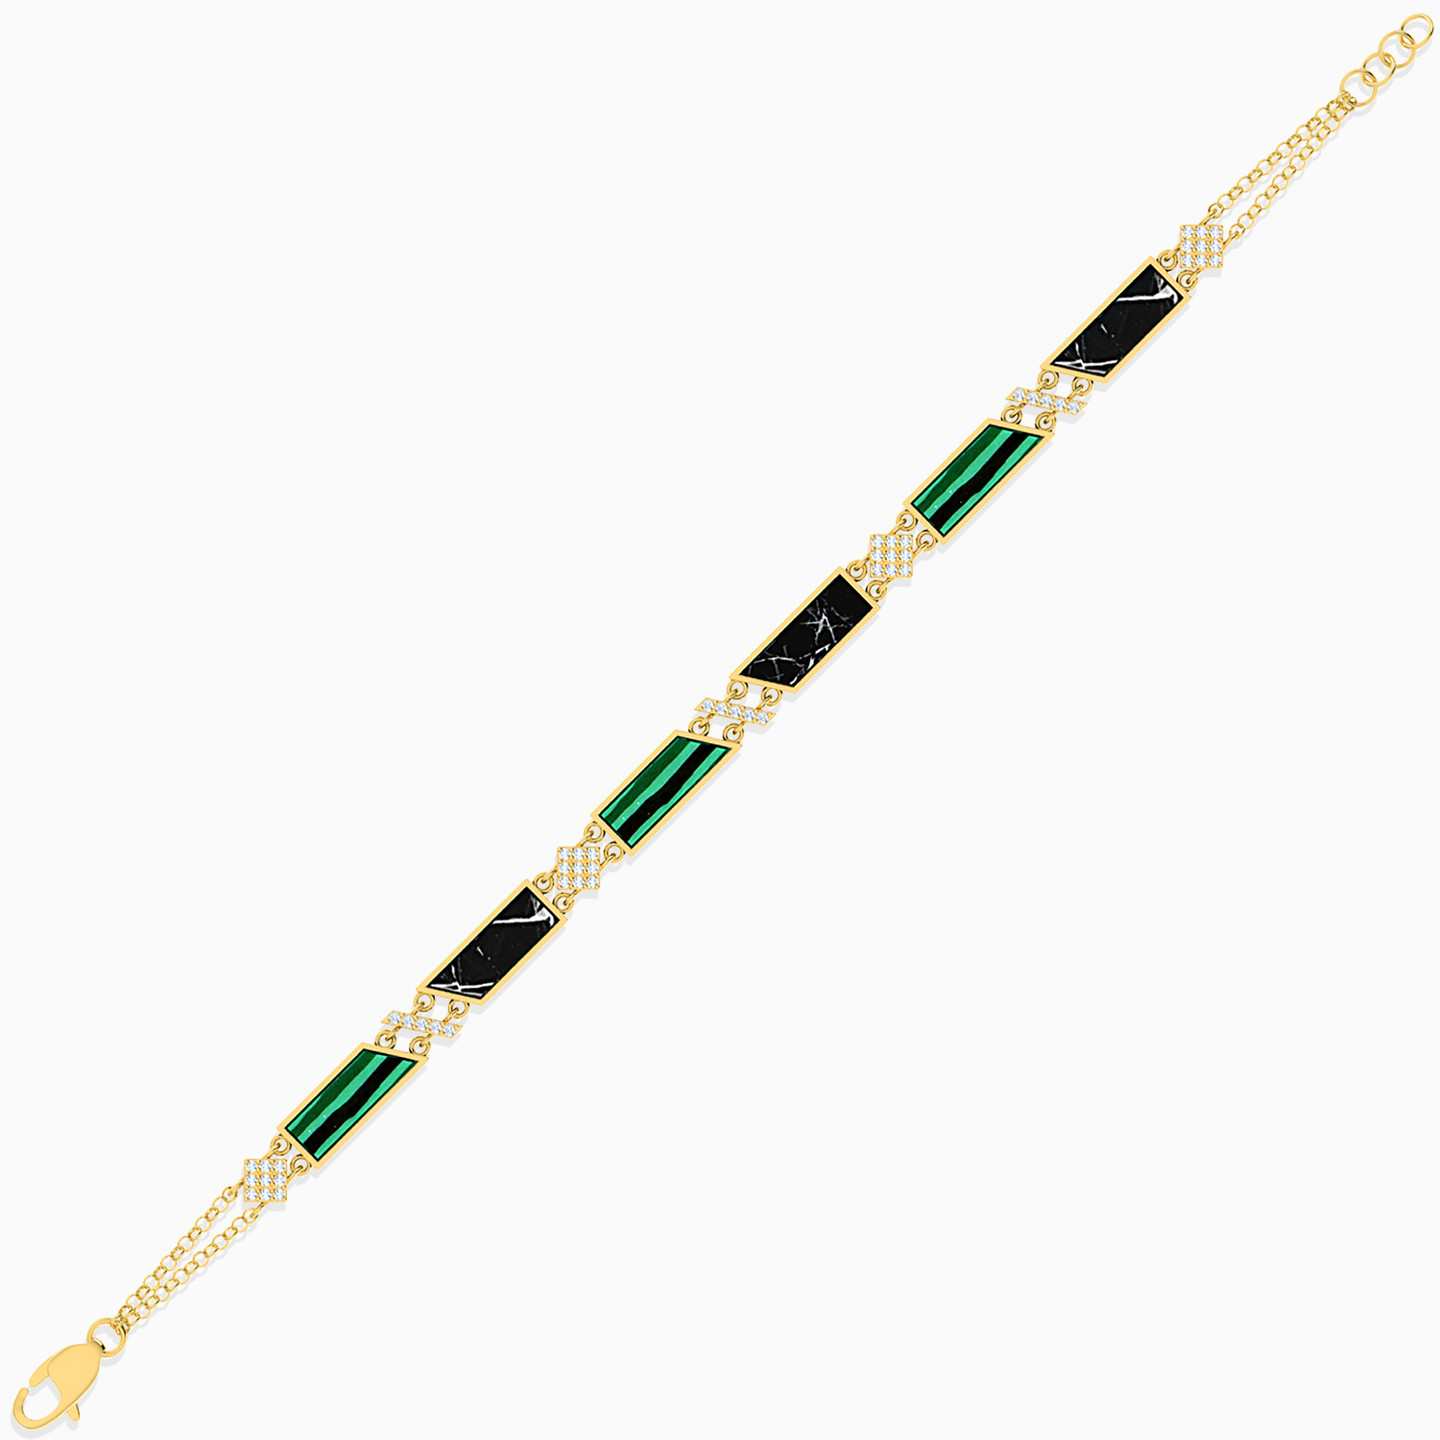 18K Gold Colored Stones Chain Bracelet - 3